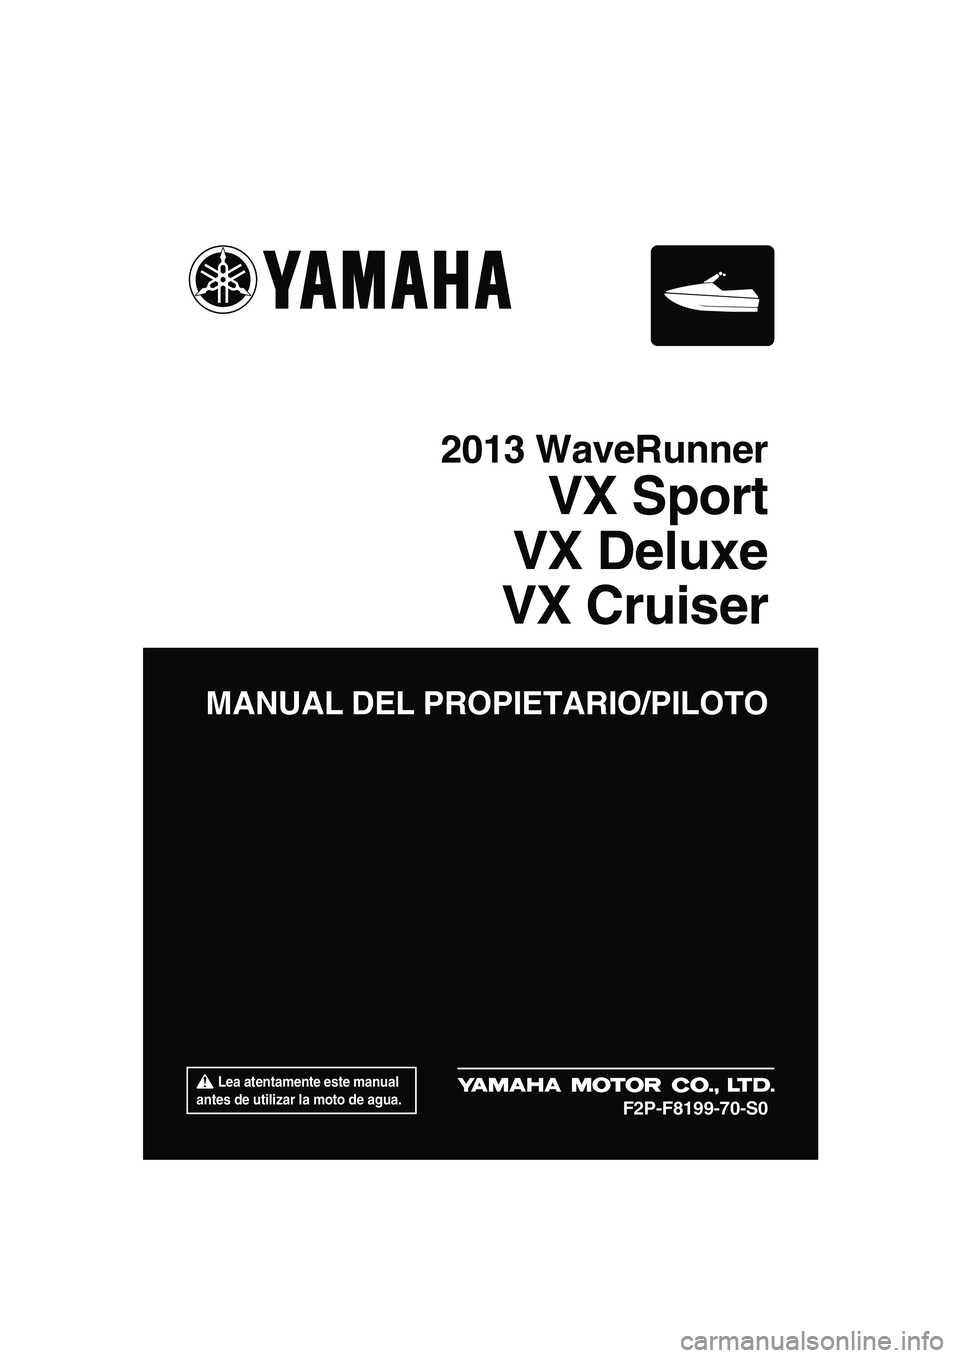 YAMAHA VX CRUISER 2013  Manuale de Empleo (in Spanish)  Lea atentamente este manual 
antes de utilizar la moto de agua.
MANUAL DEL PROPIETARIO/PILOTO
2013 WaveRunner
VX Sport
VX Deluxe
VX Cruiser
F2P-F8199-70-S0
UF2P70S0.book  Page 1  Tuesday, July 24, 20